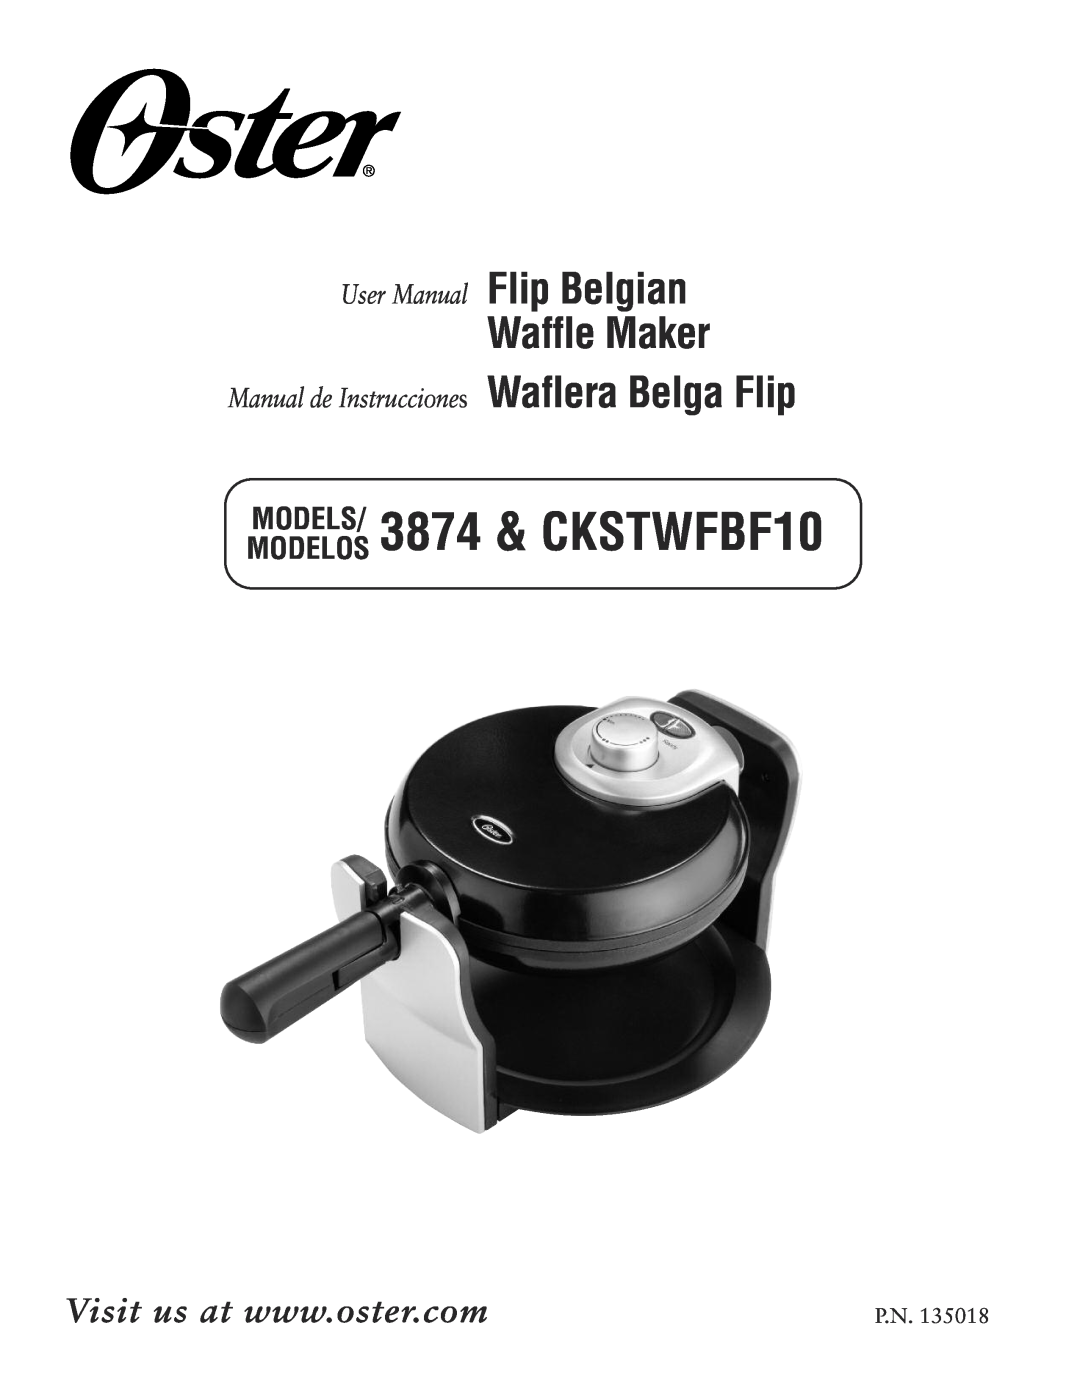 Oster 135018 user manual MODELOSMODELS/ 3874 & CKSTWFBF10, Flip Belgian Waffle Maker Waflera Belga Flip 